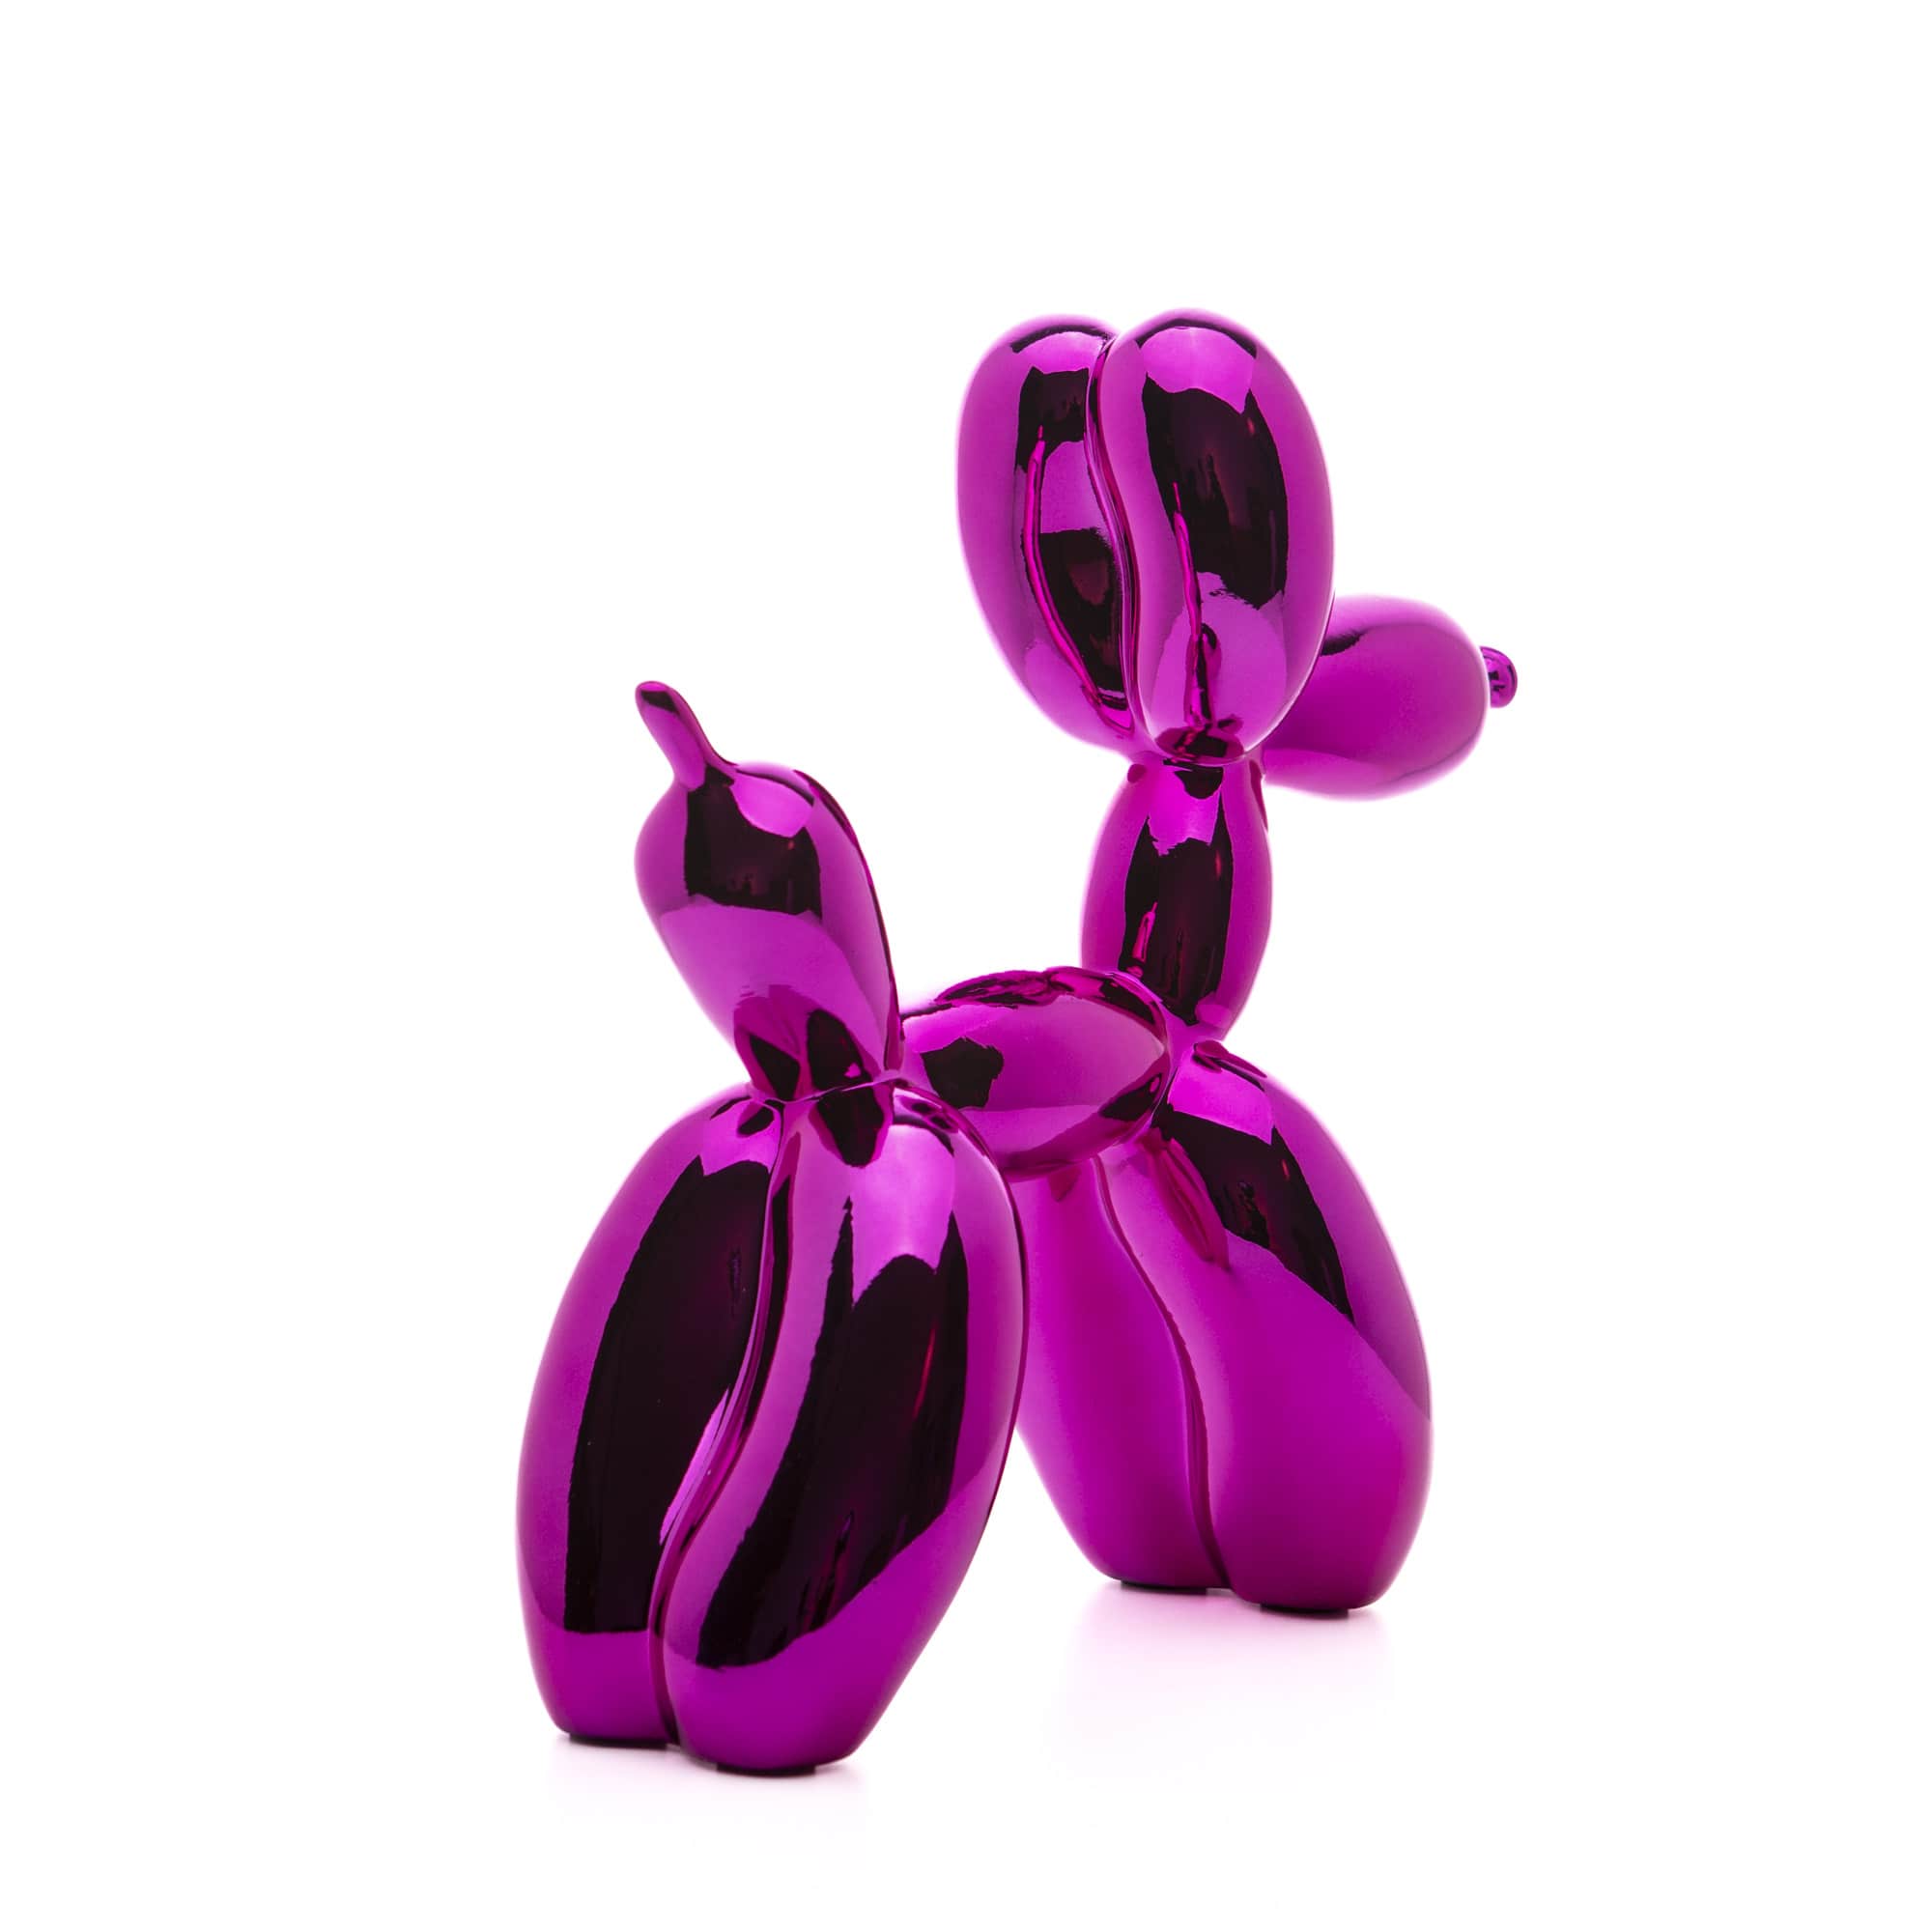 Elektriker Governable solid Jeff Koons - Balloon Dog (Pink) – Melefors